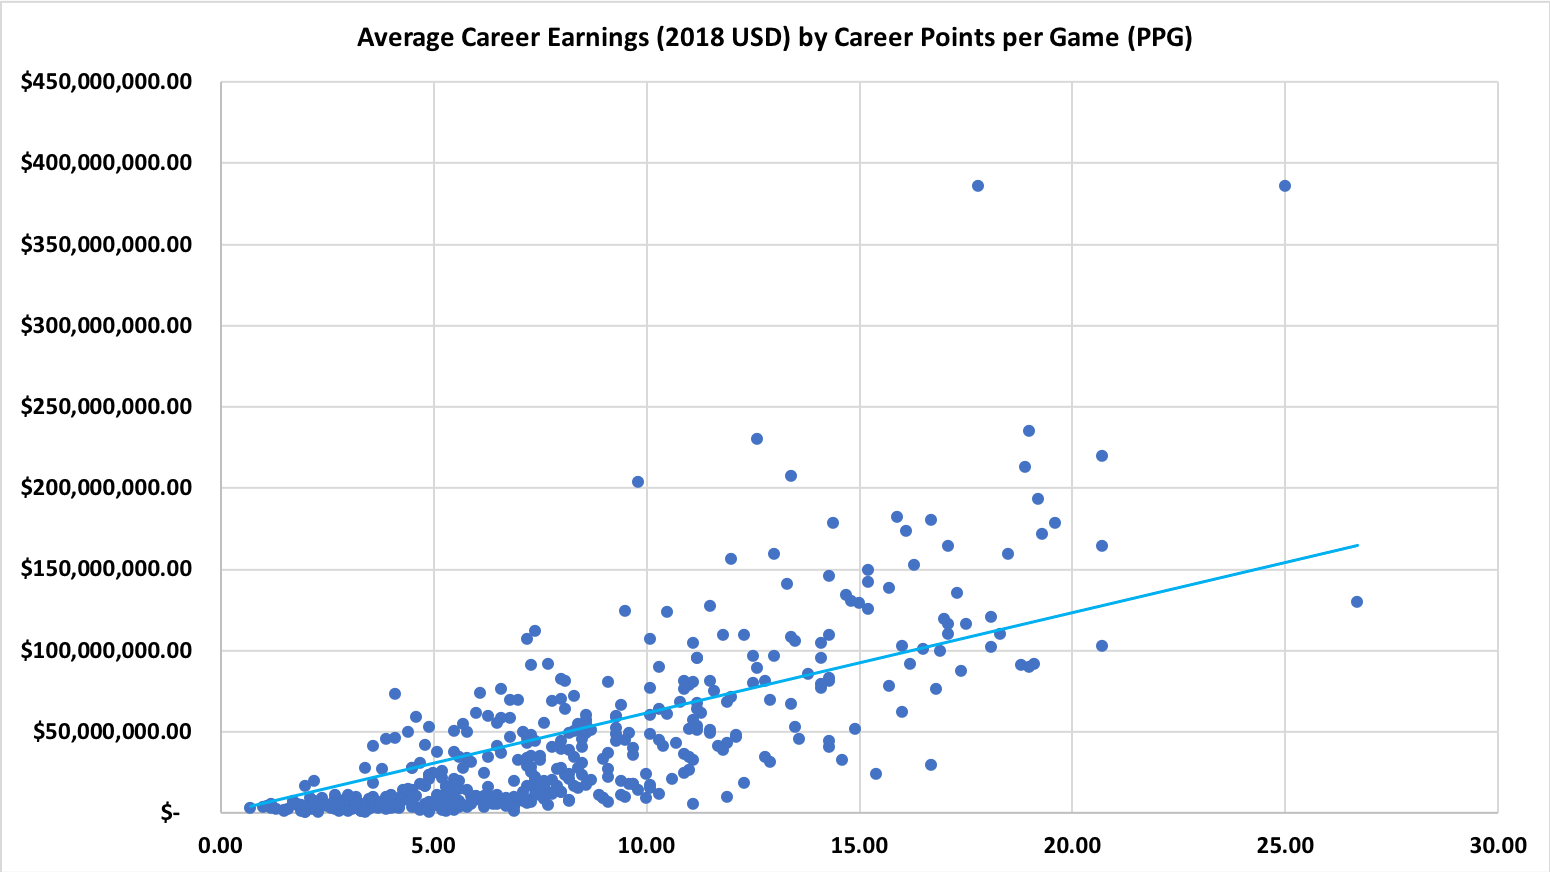 Average NBA Career Earnings by Career Points per Game